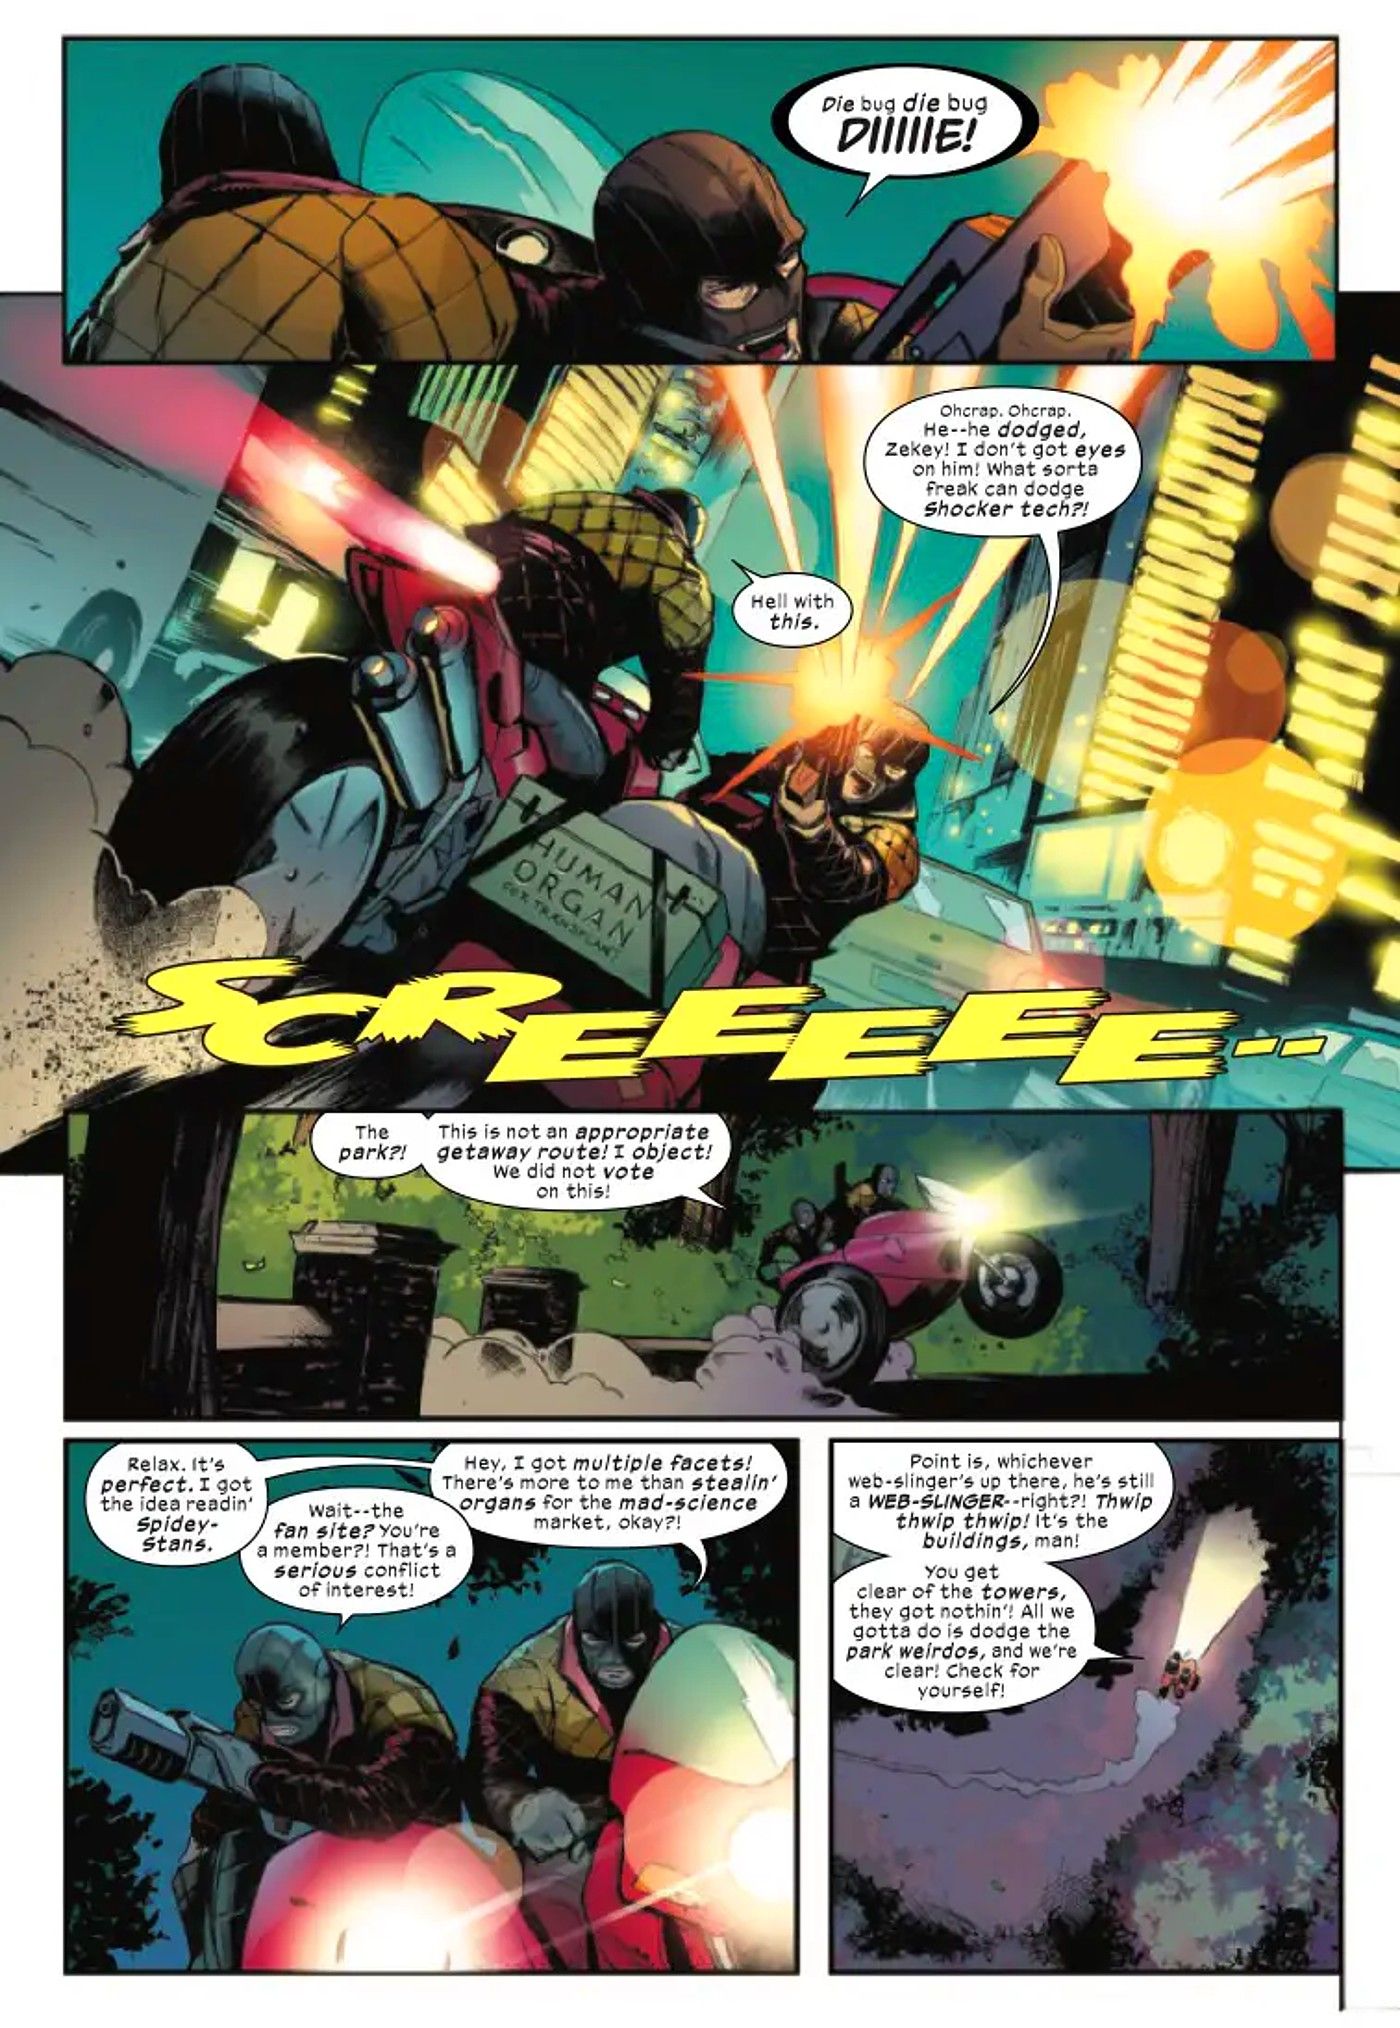 uncanny spider-man 1 preview art x-men nightcrawler page 1